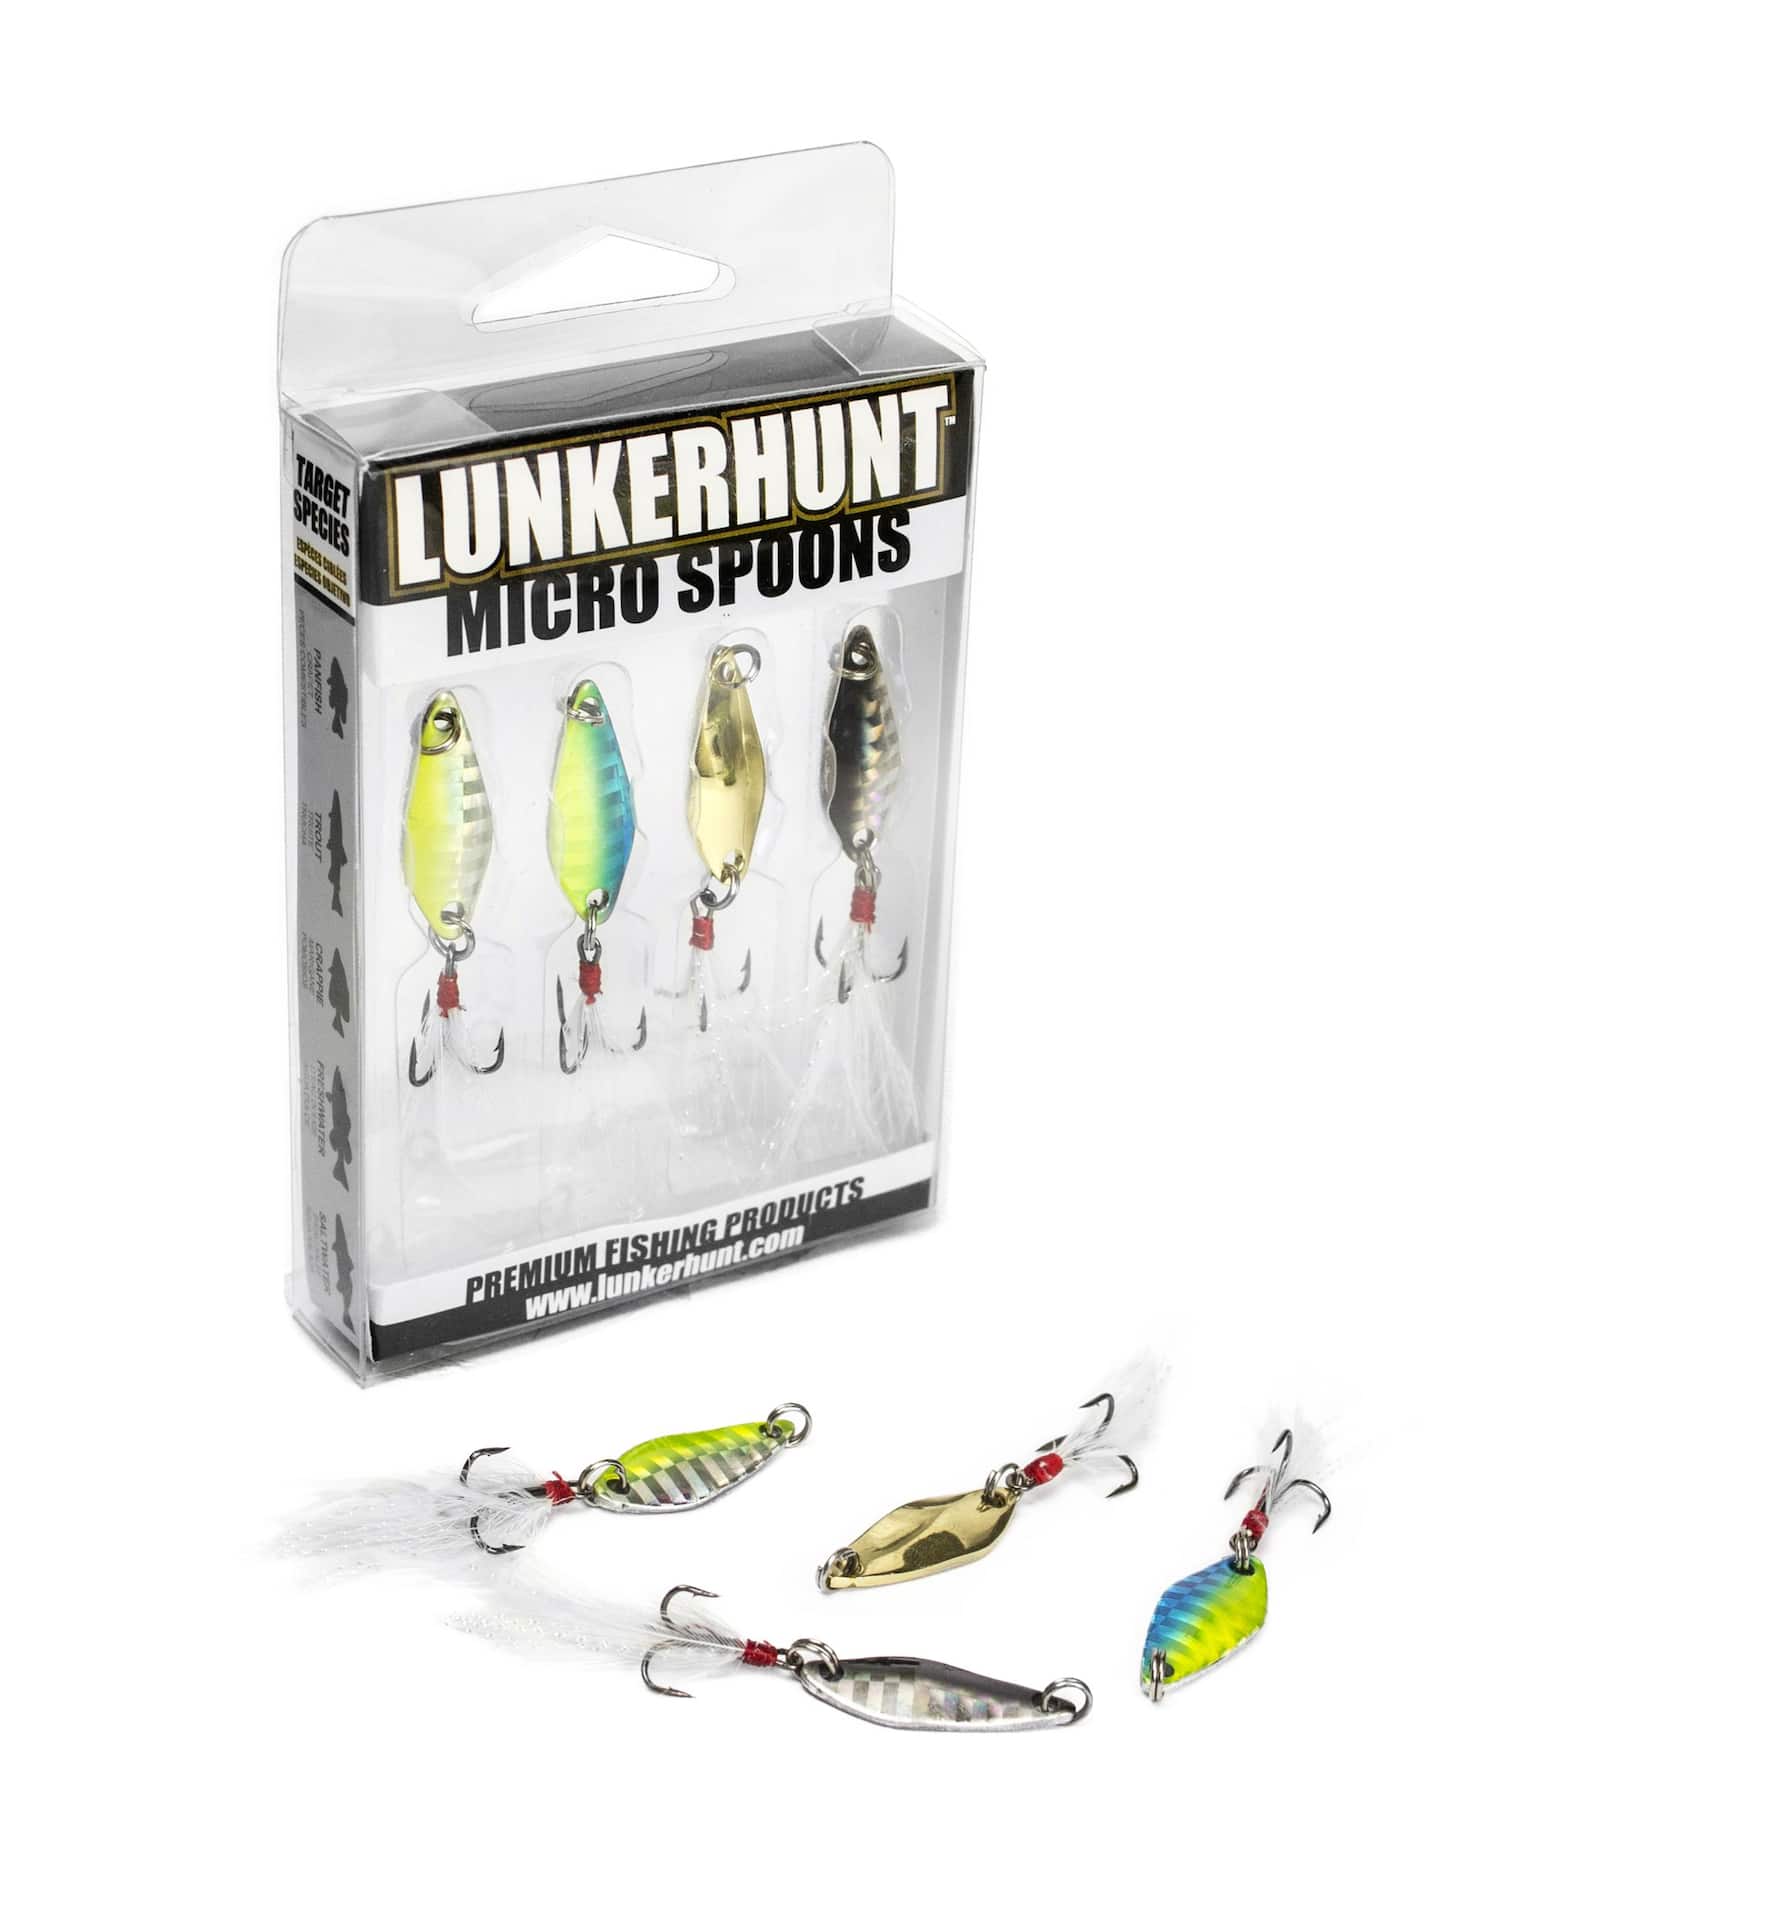 Enhanced Flexibility 10pcs Micro Spoon Sets for Shiny Fishing Lure Kit